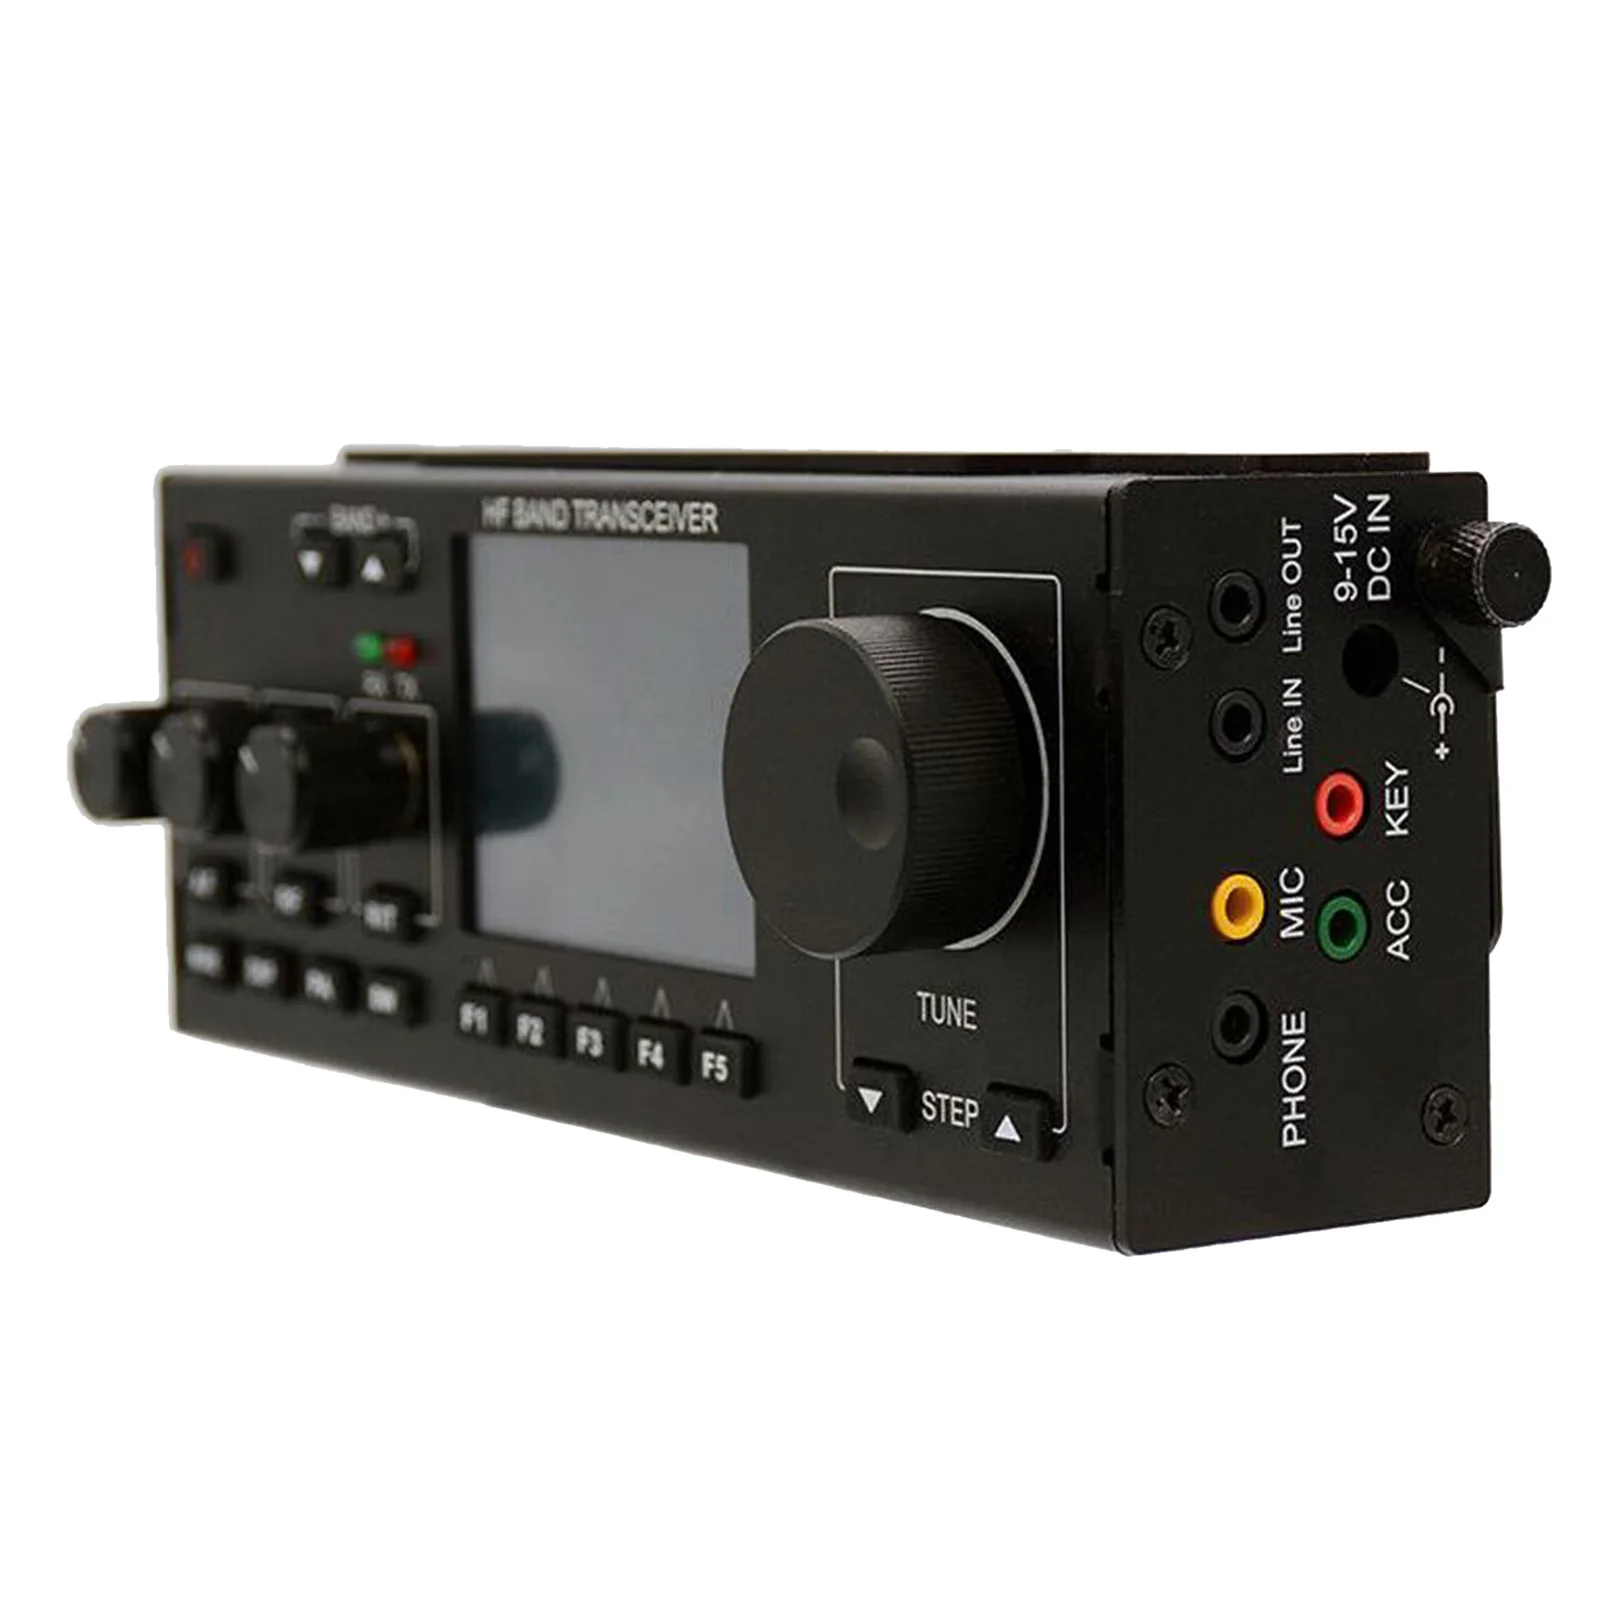 RS-918 10W-15W HF SDR Transceiver MCHF-QRP Transceiver Amateur Shortwave Radio New